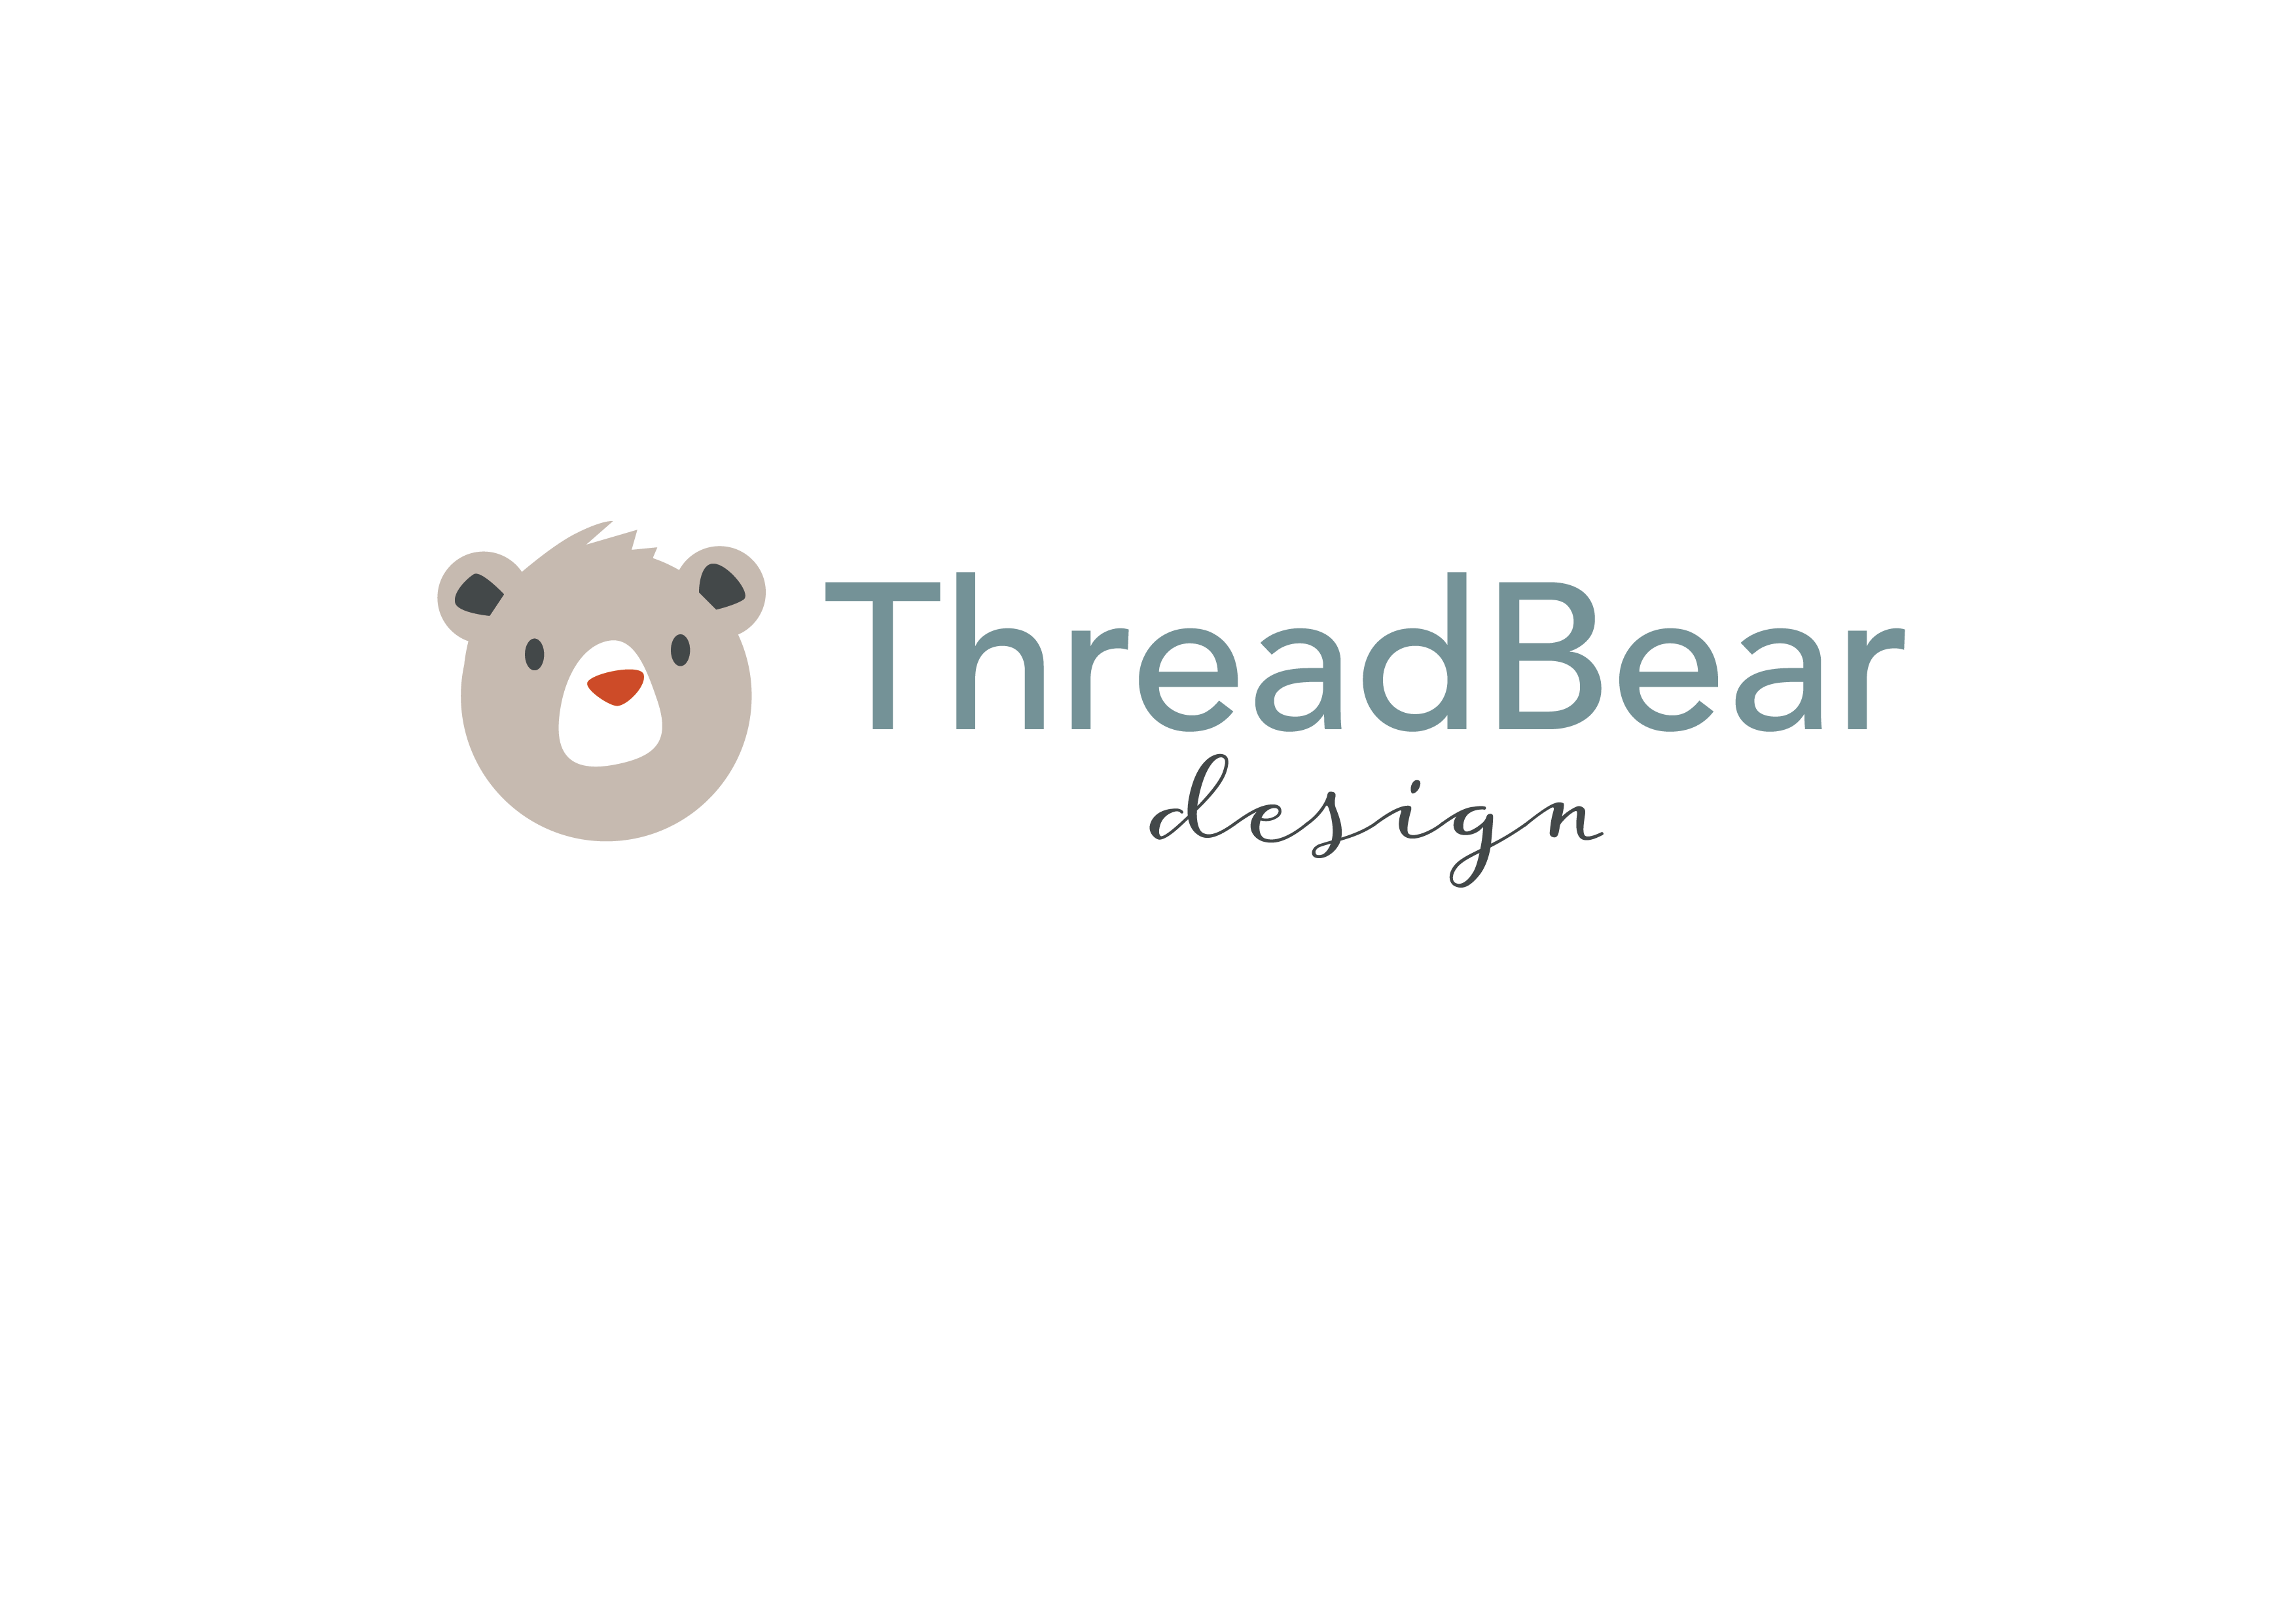 threadbear designs logo